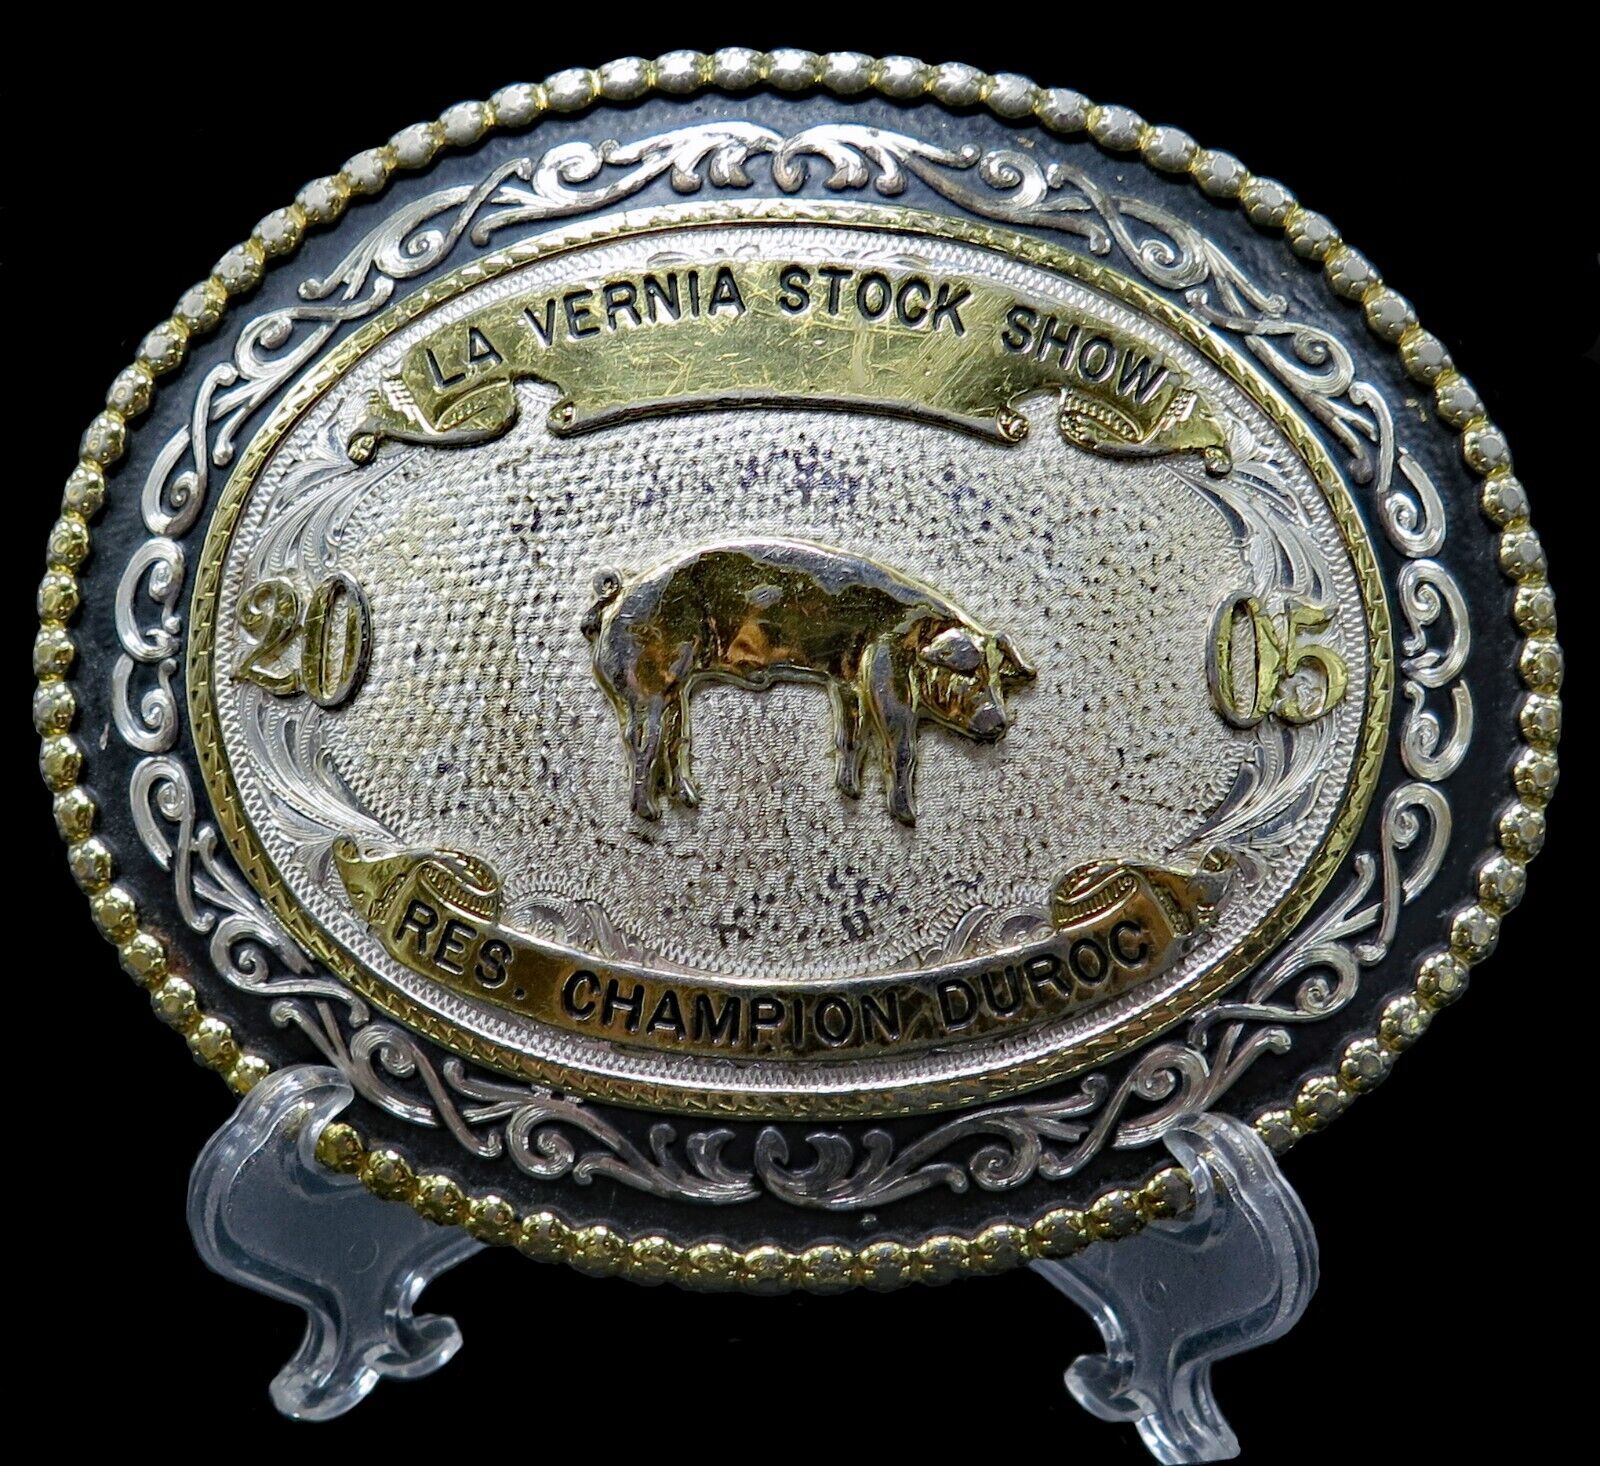 Pig Hog La Vernia Stock Show Champion Duroc Montana Silversmiths Belt Buckle